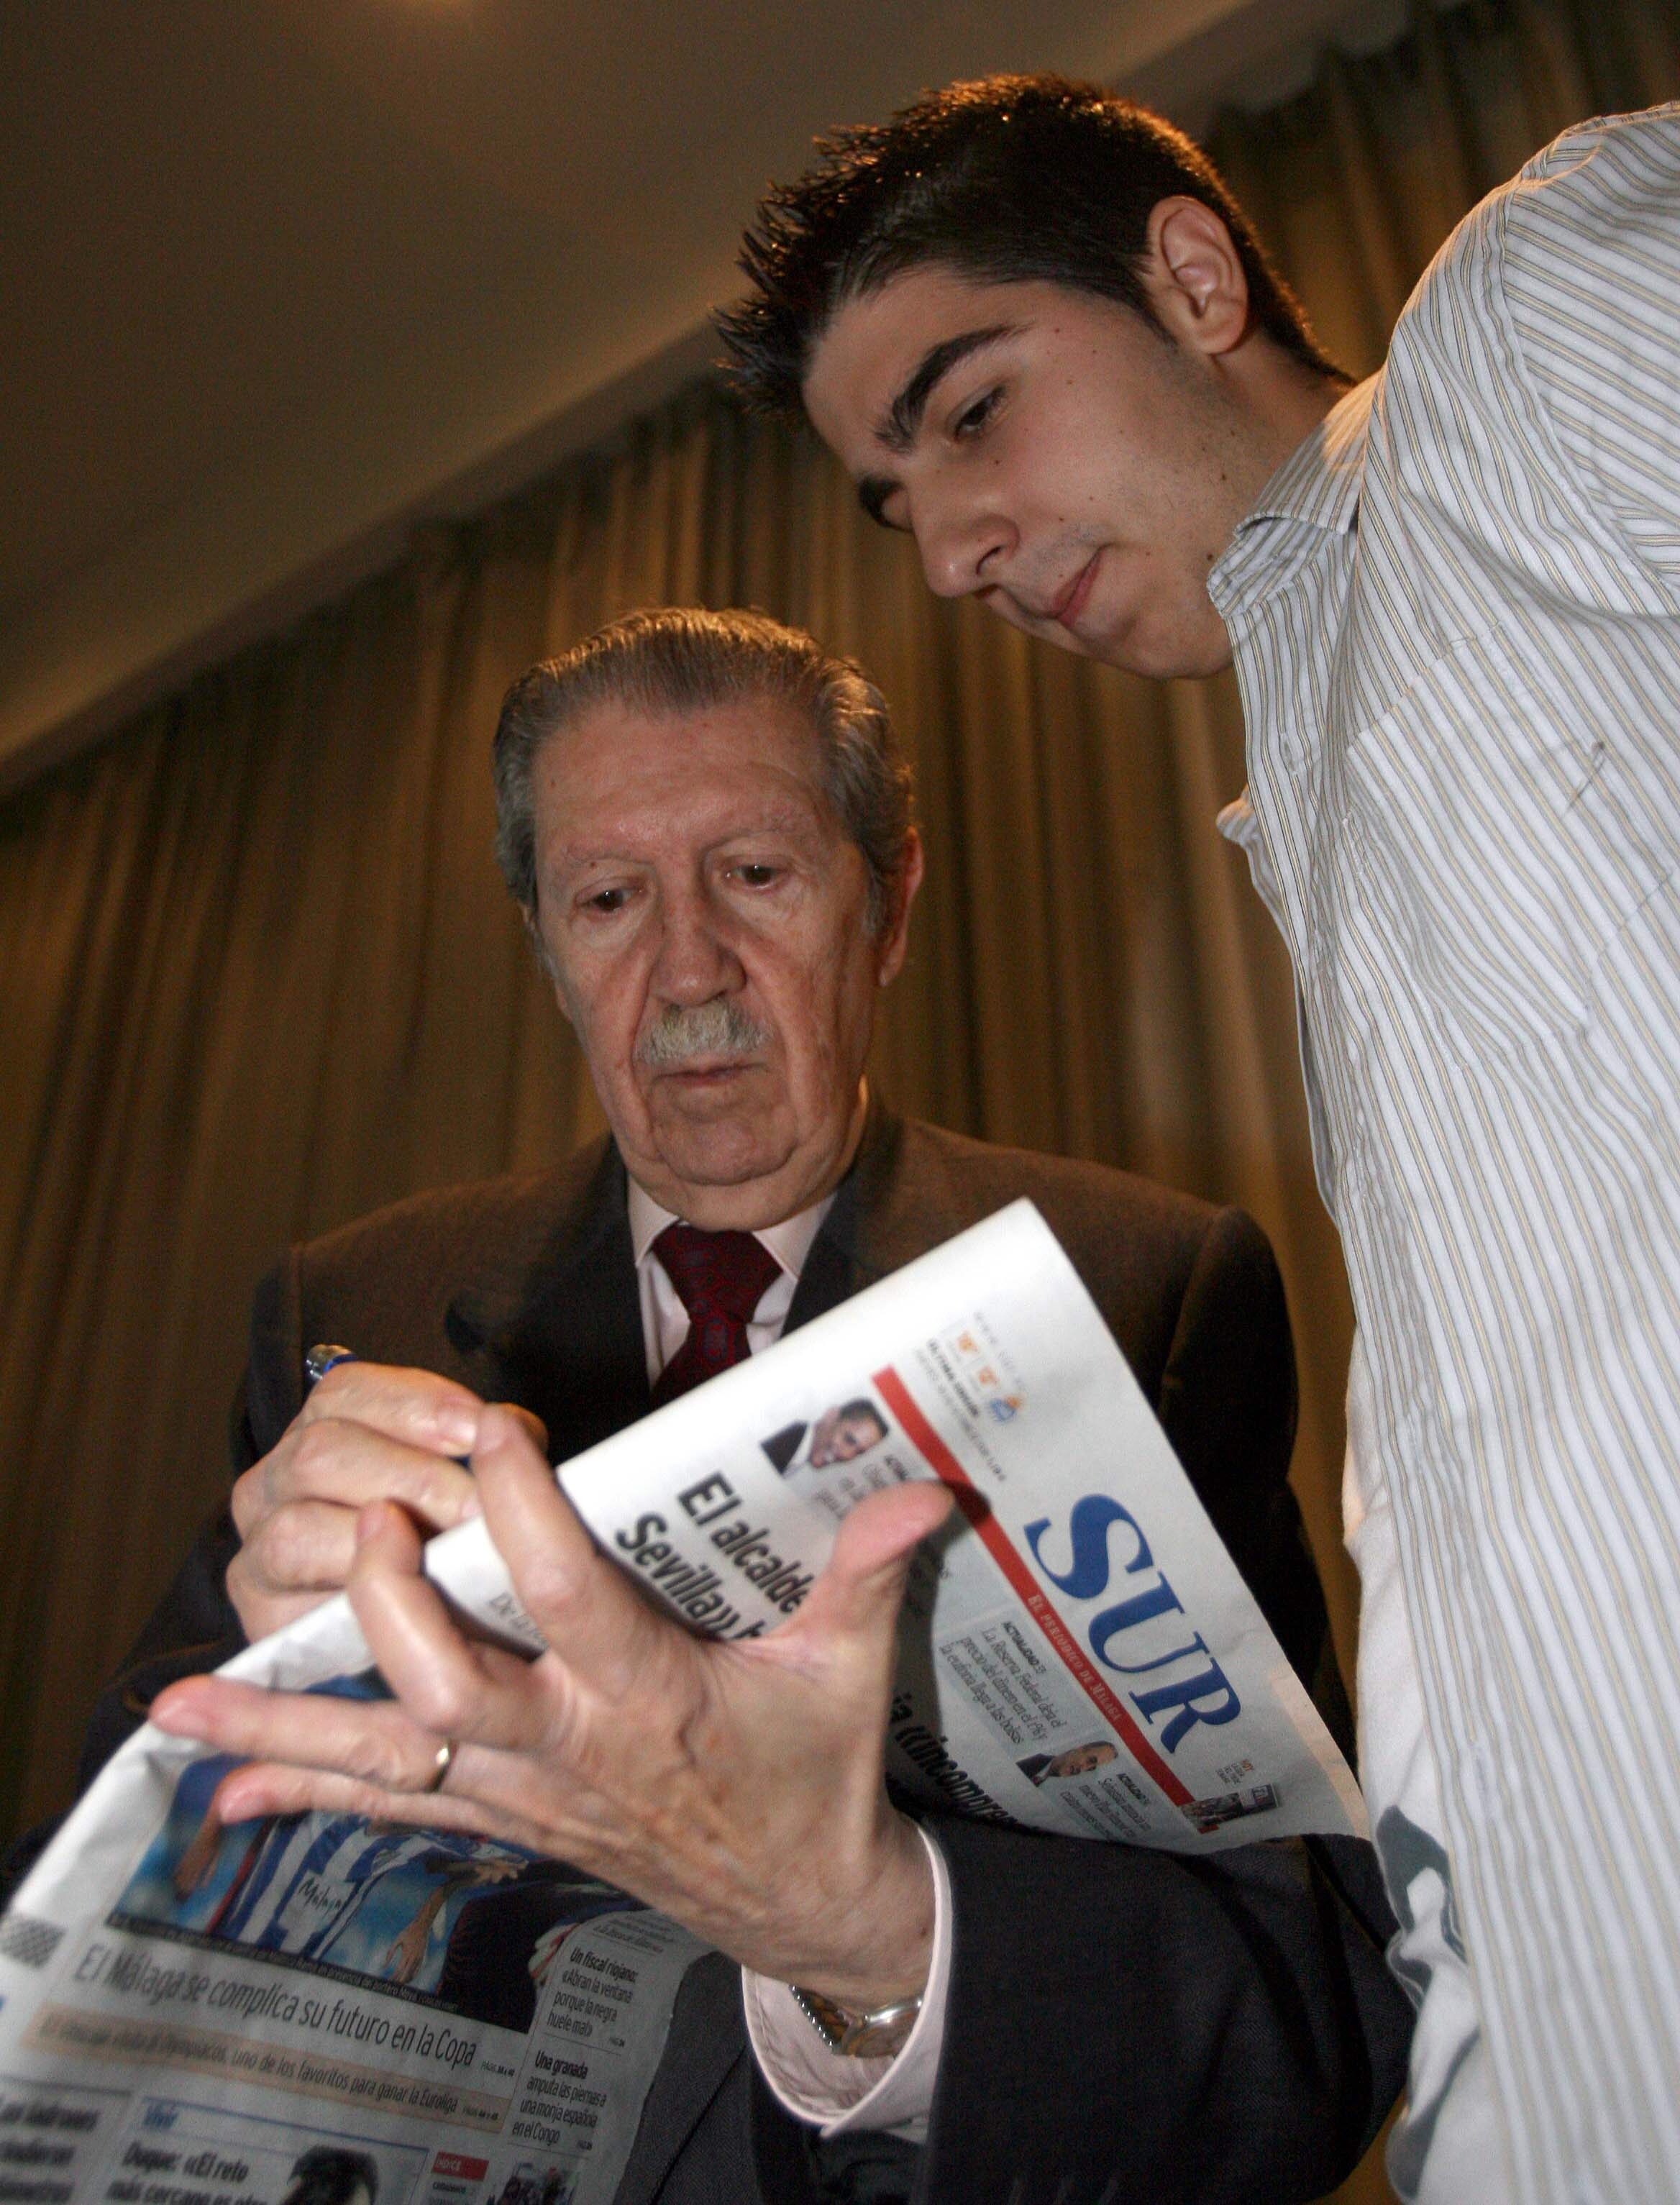 2008. Manuel Alcántara firma su columna en un ejemplar de SUR a un joven.